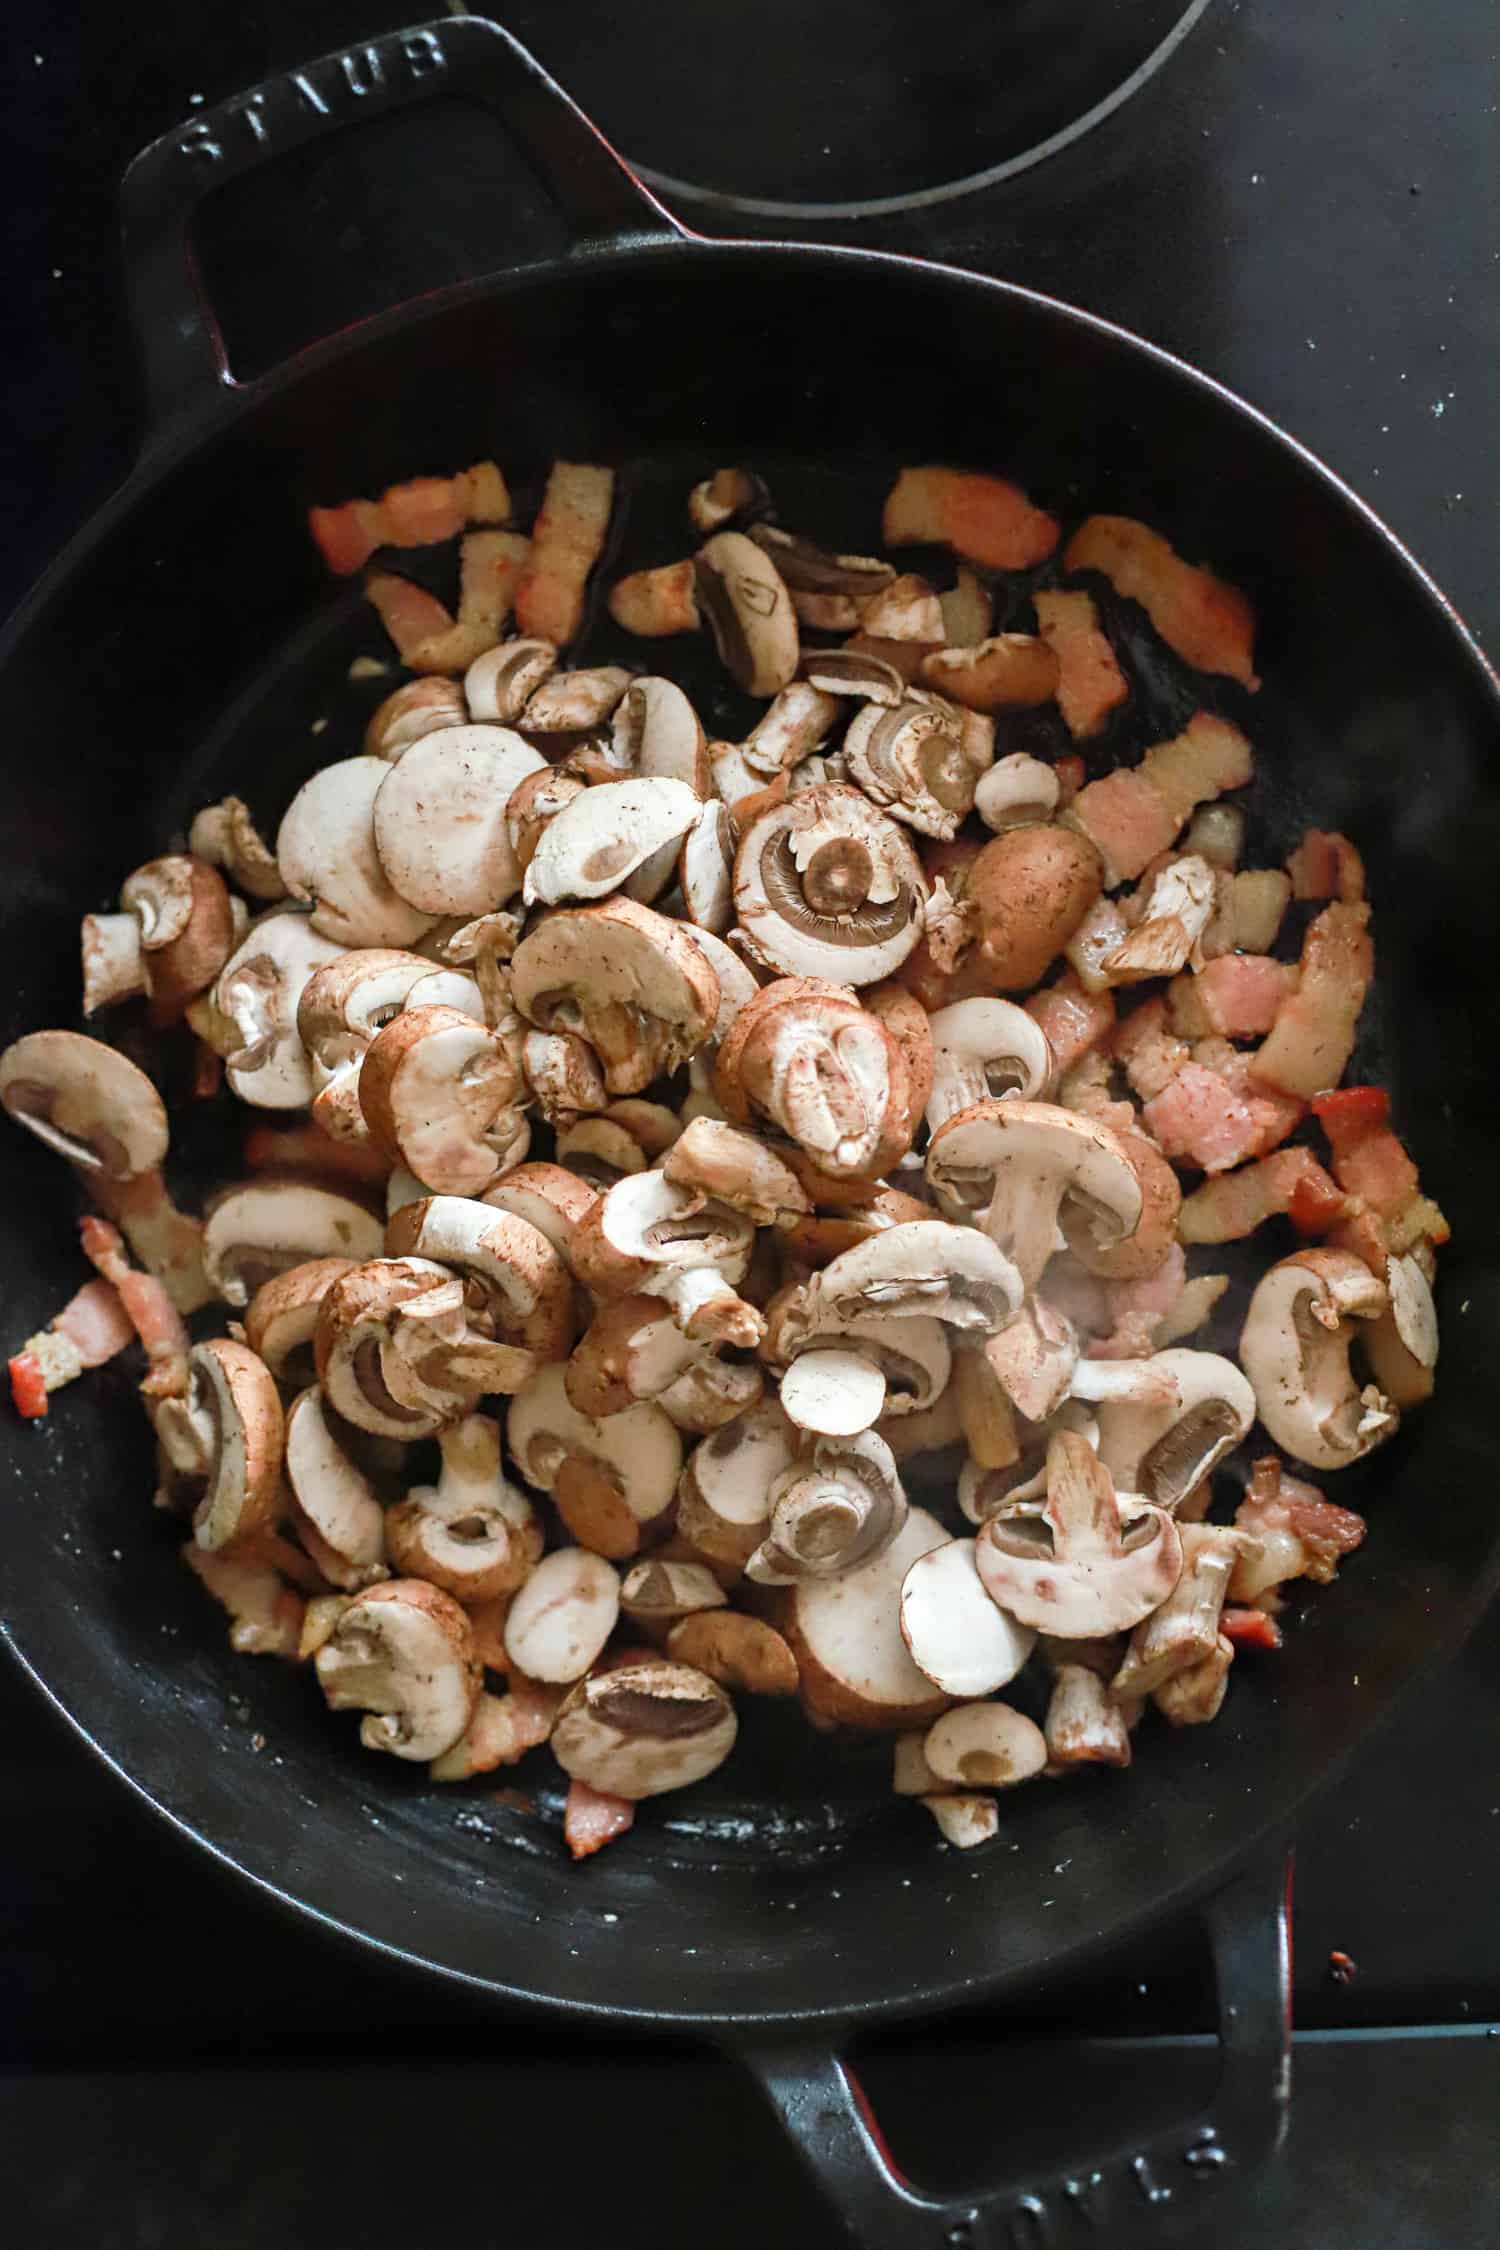 black skillet with raw mushrooms.